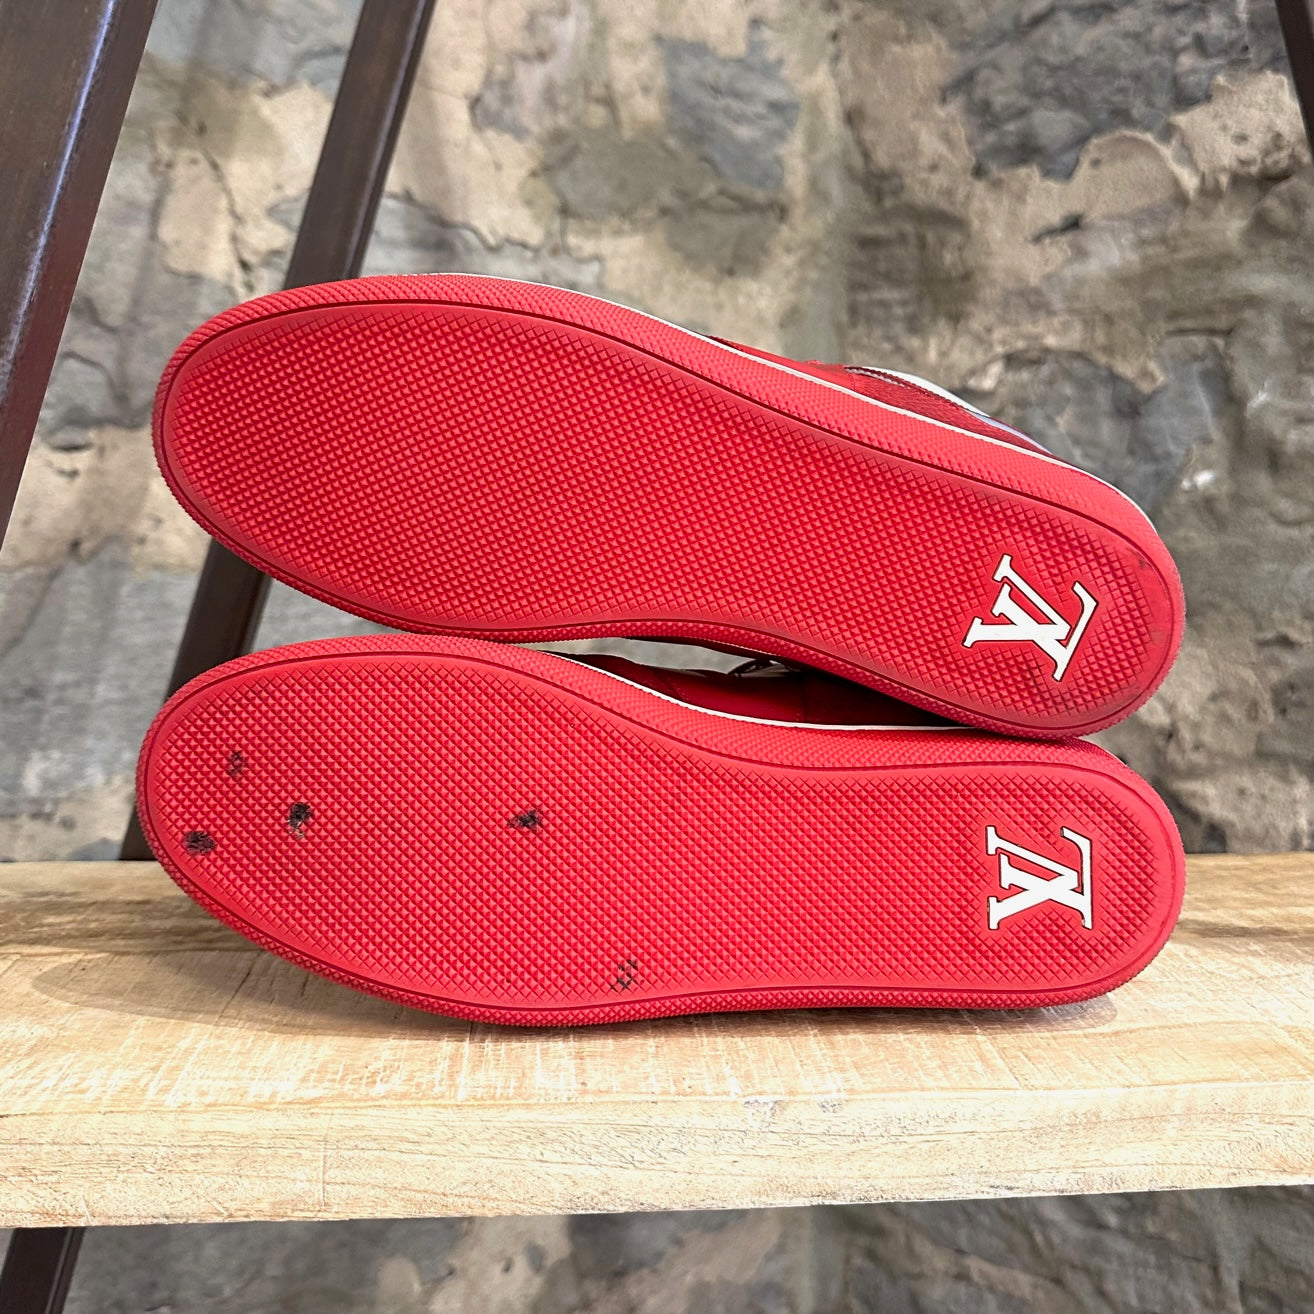 Louis Vuitton, Shoes, Louis Vuitton Shoes Red Bottom